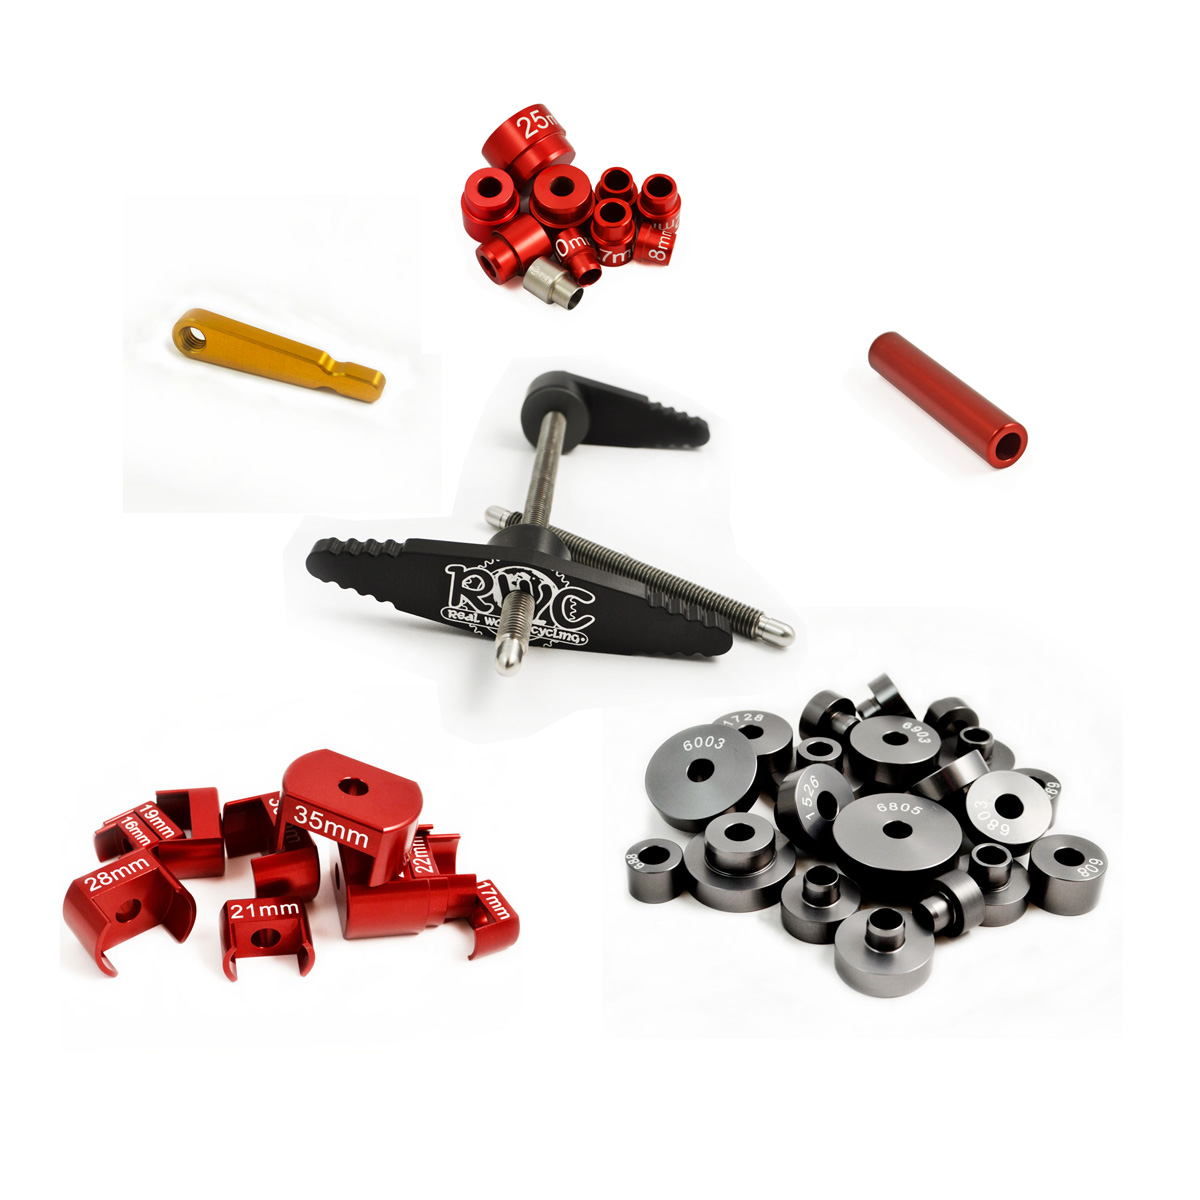 rwc modular suspension bearing tool set, complete